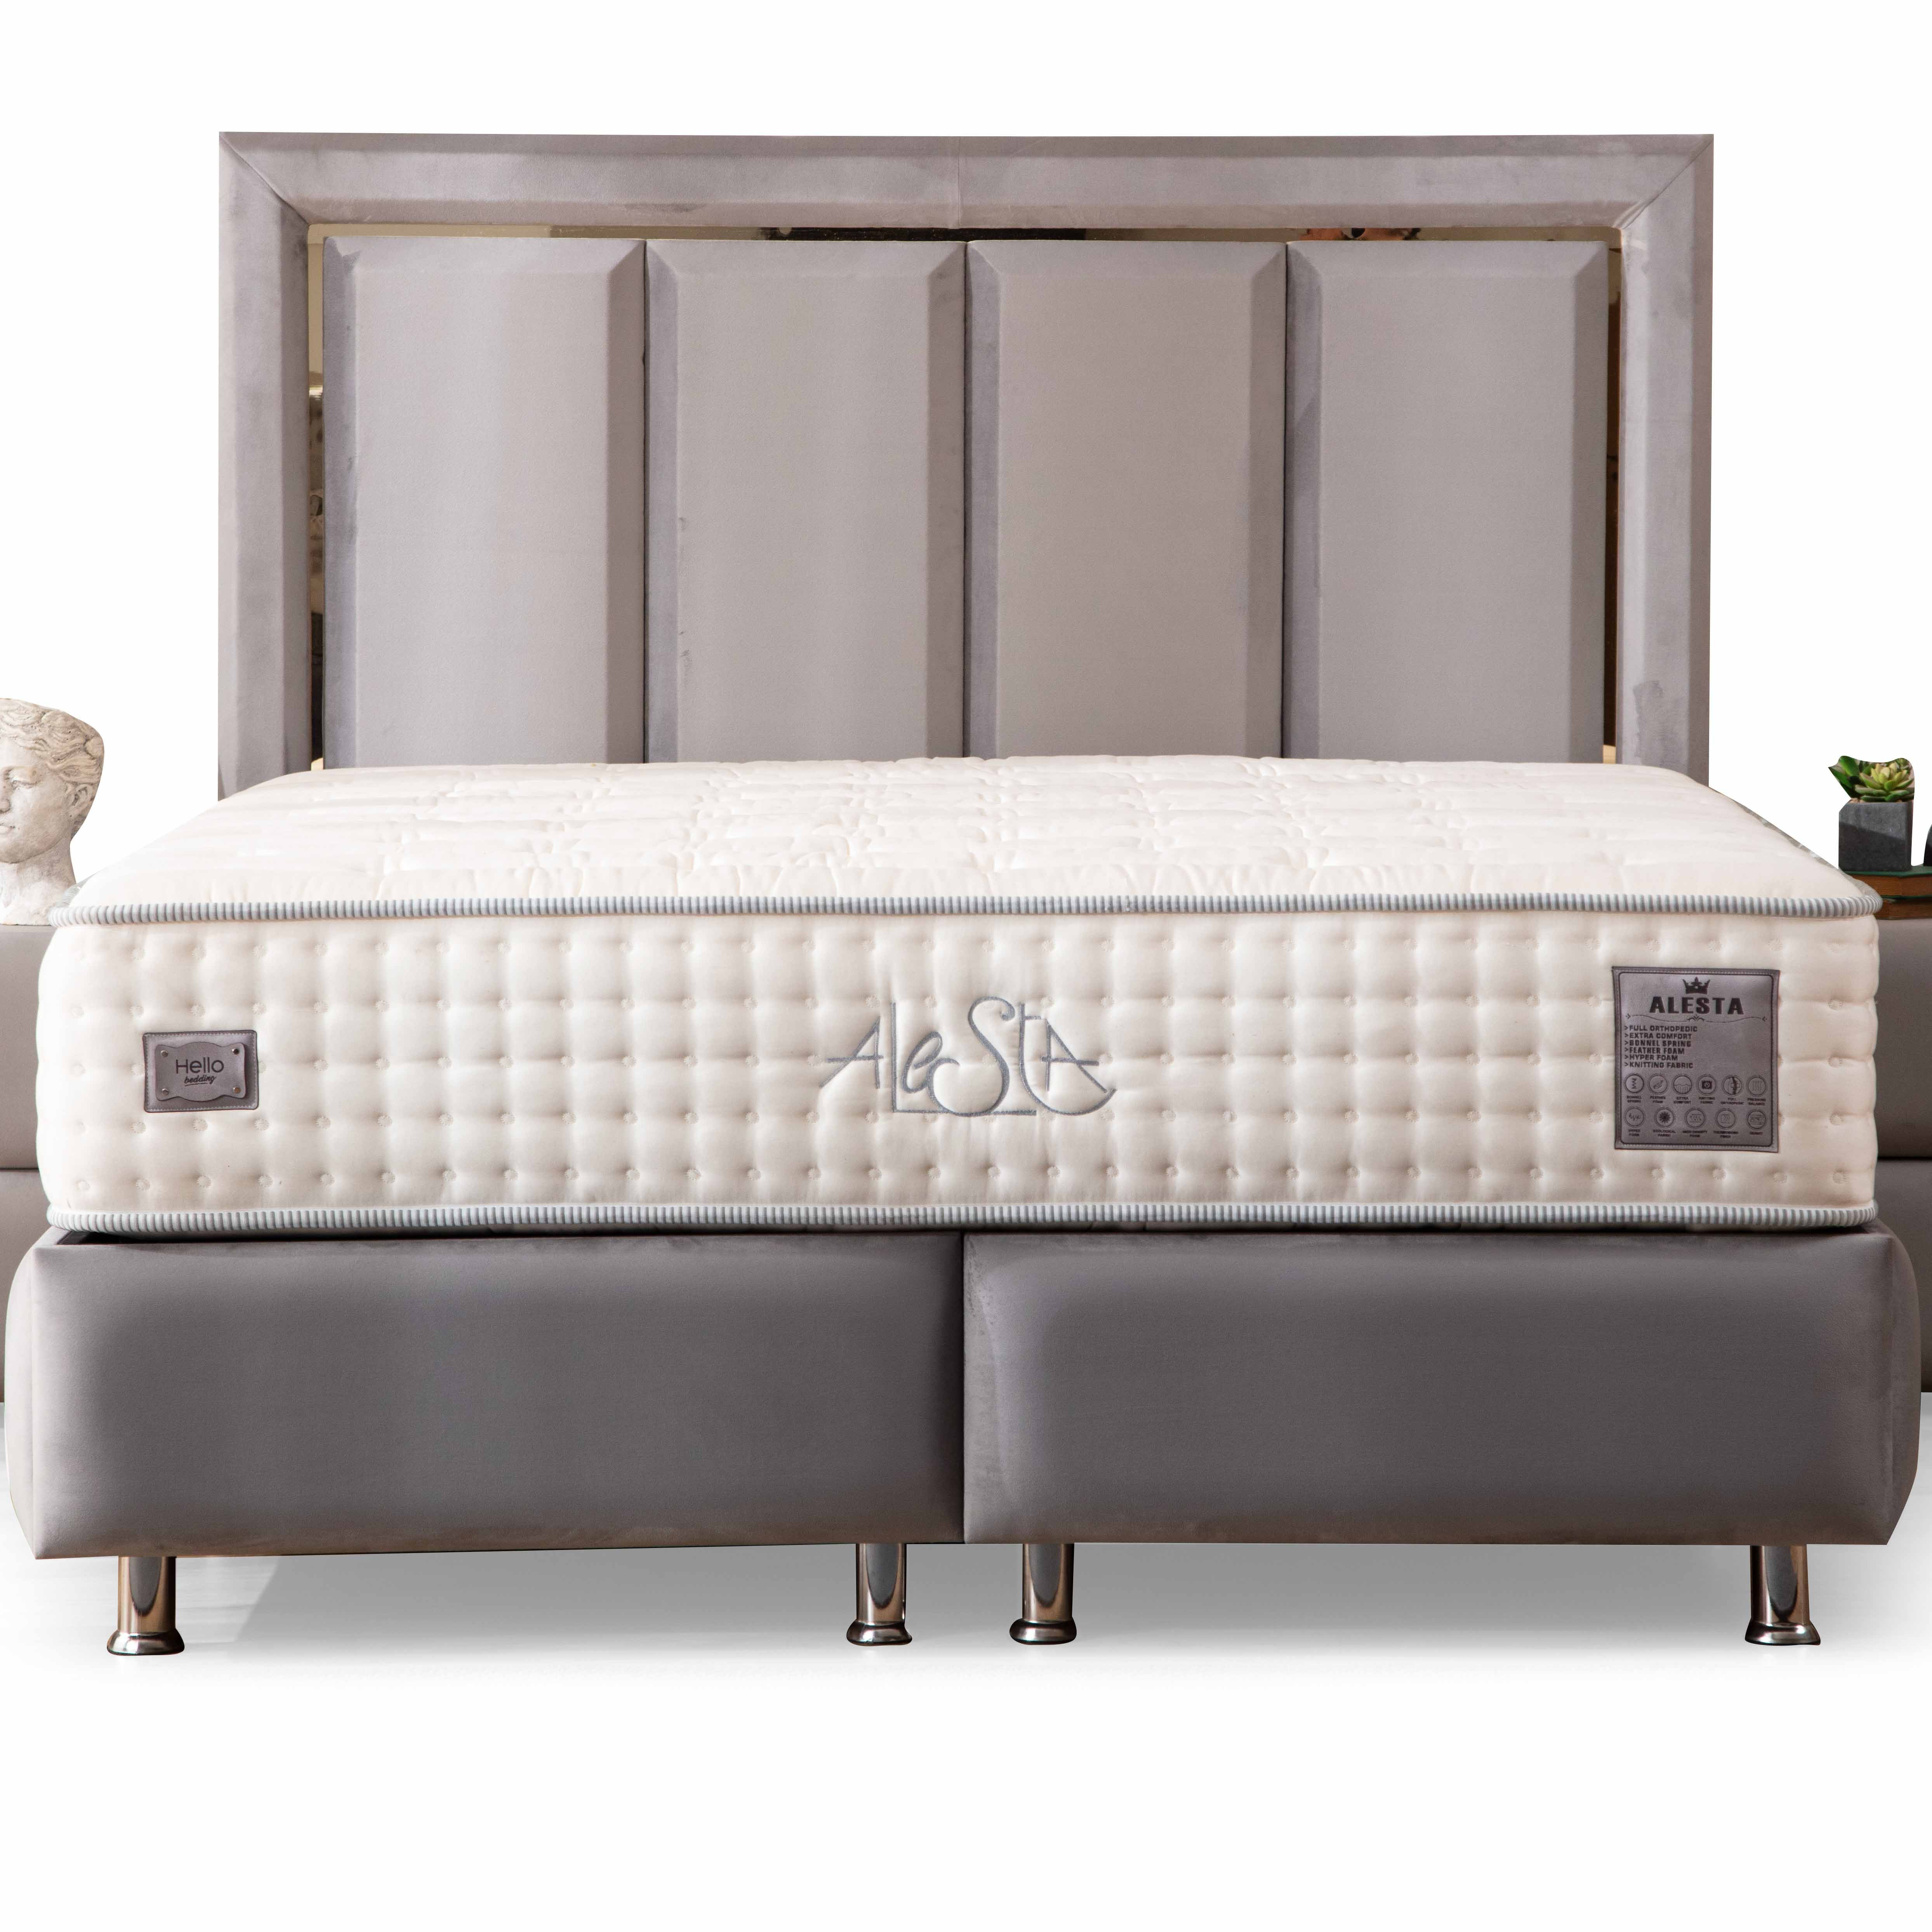 Bergama Bed With Storage 140x190 cm